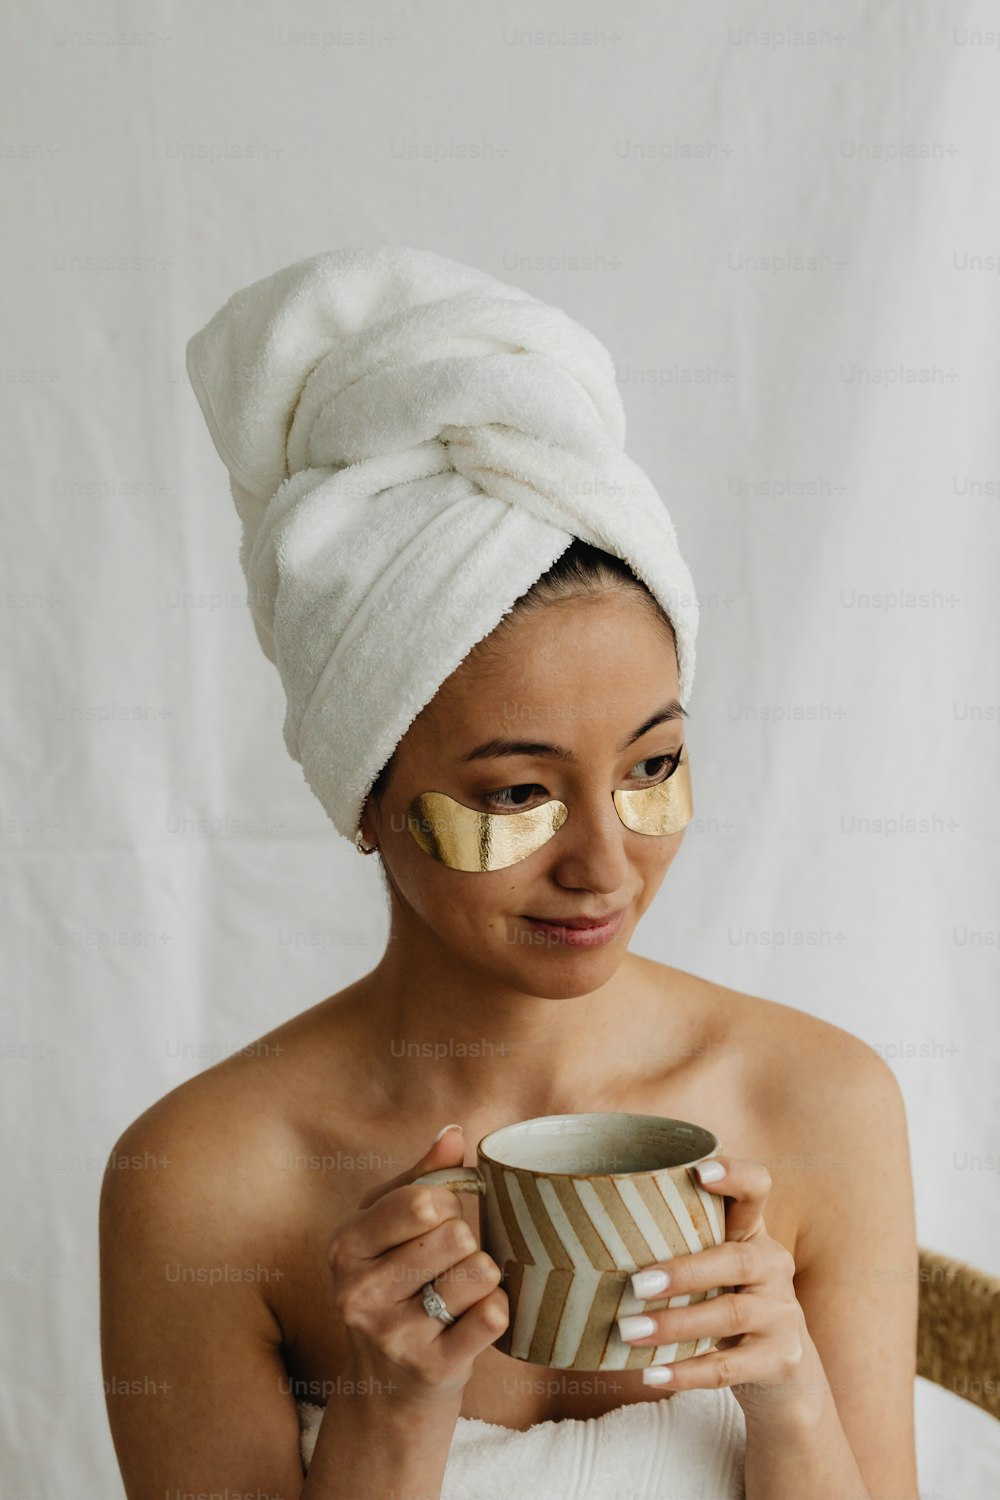 Una mujer con una toalla en la cabeza sosteniendo una taza